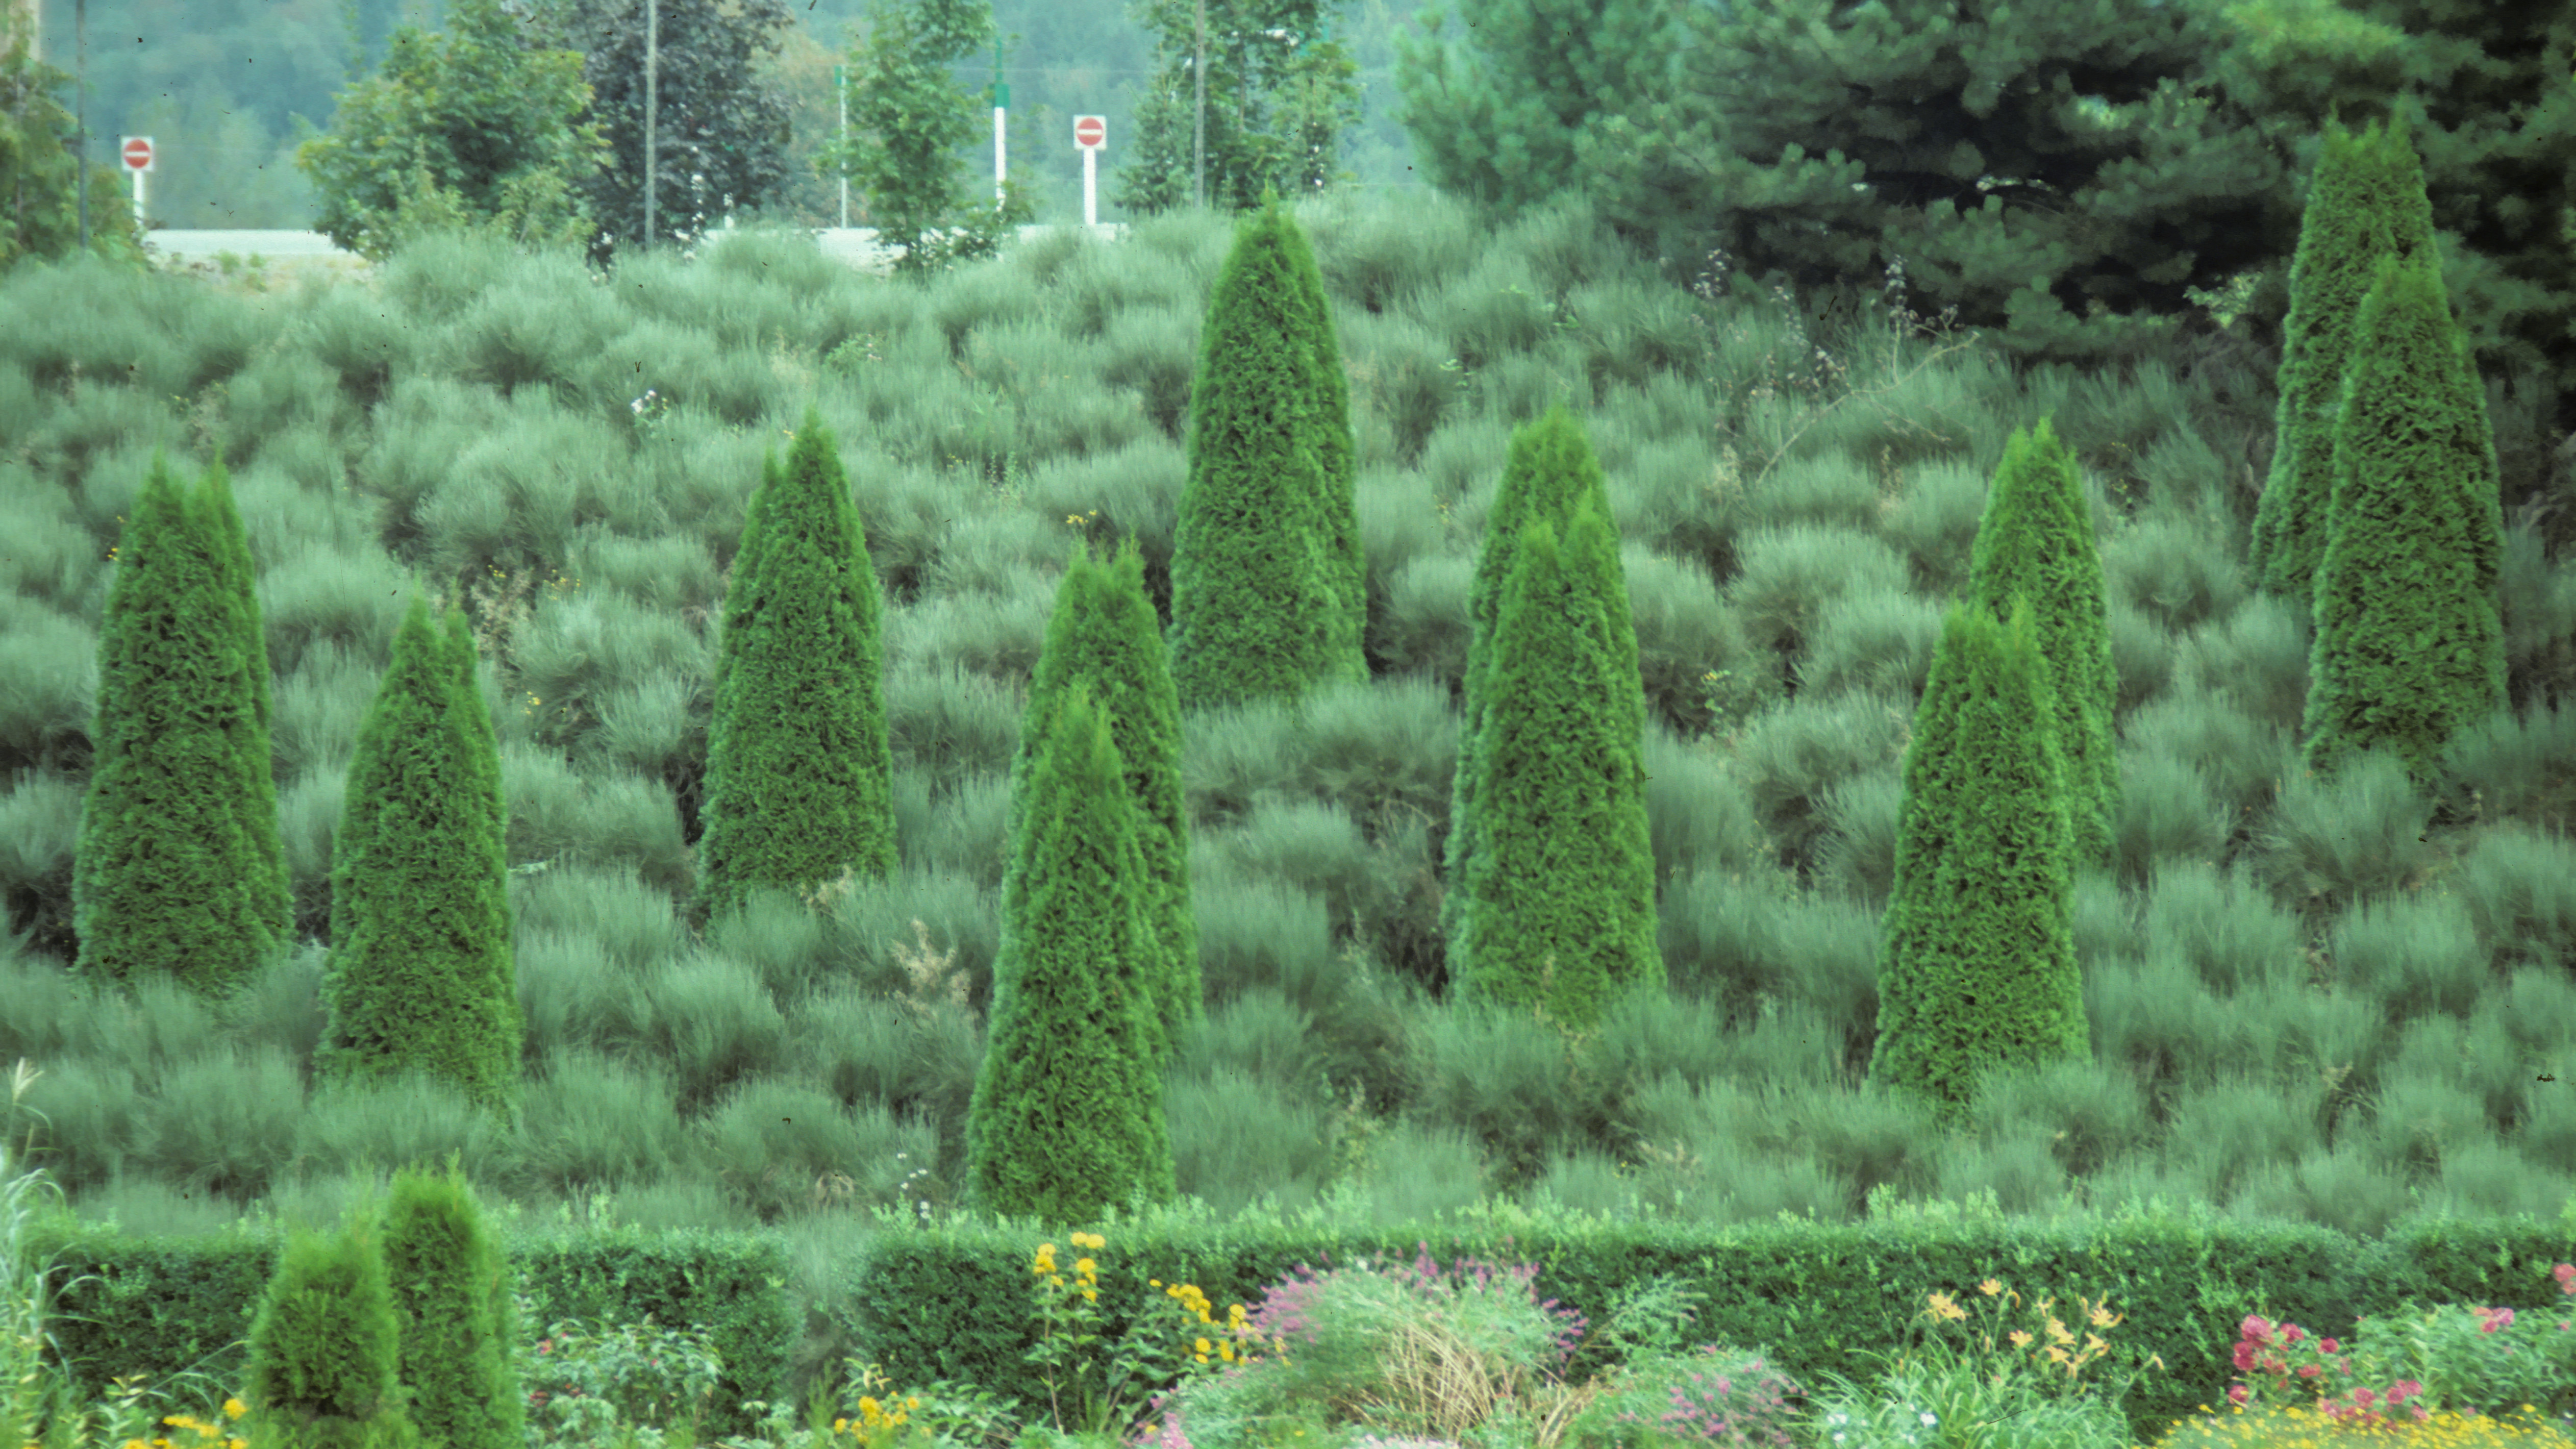 A hillside with some adorable fastigiate conifers